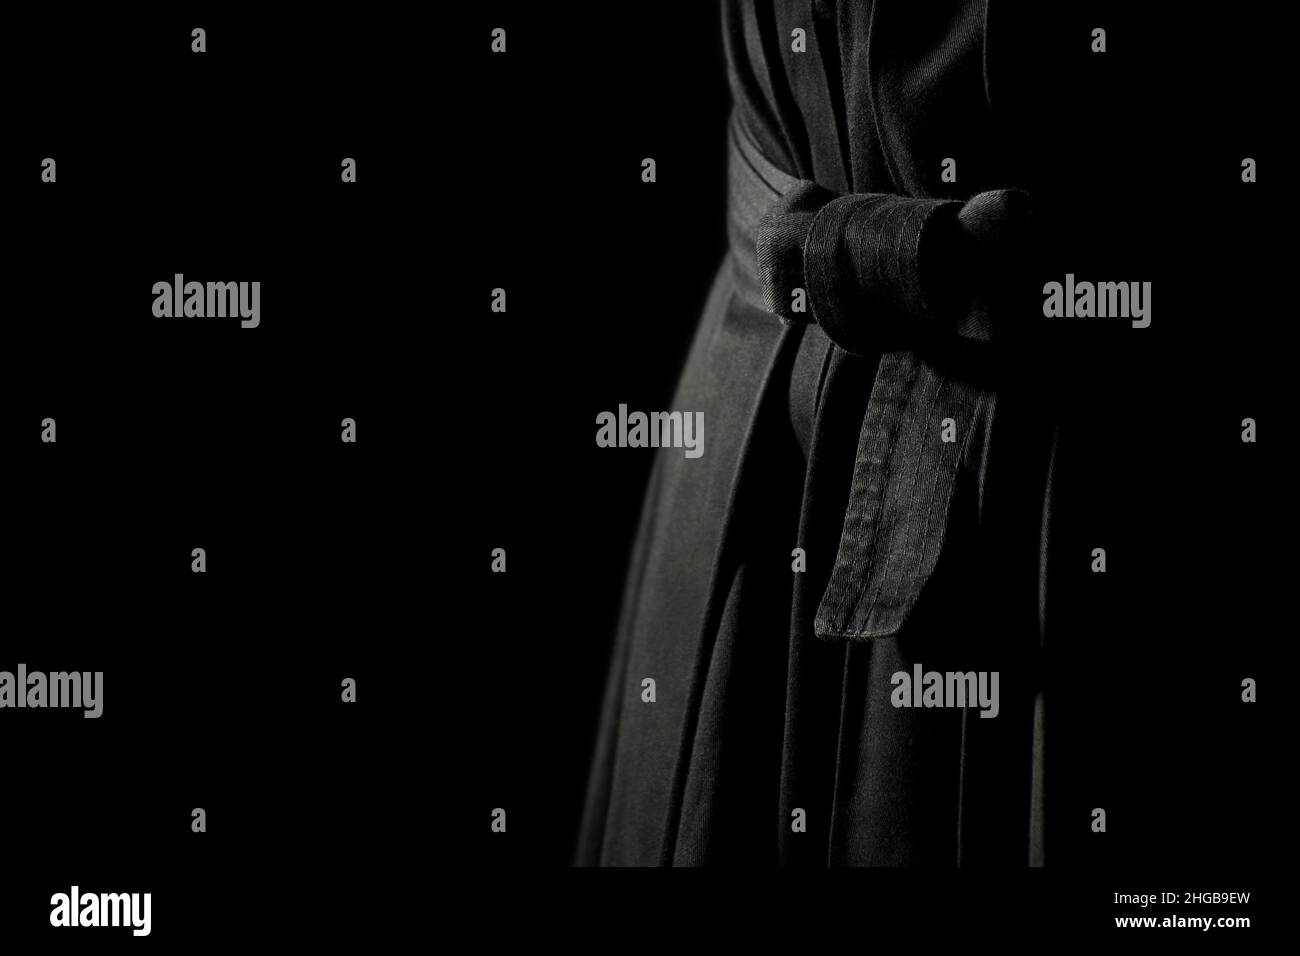 Aikido hakama, japanese martial arts uniform on black background. Shallow depth of field. SDF. Stock Photo